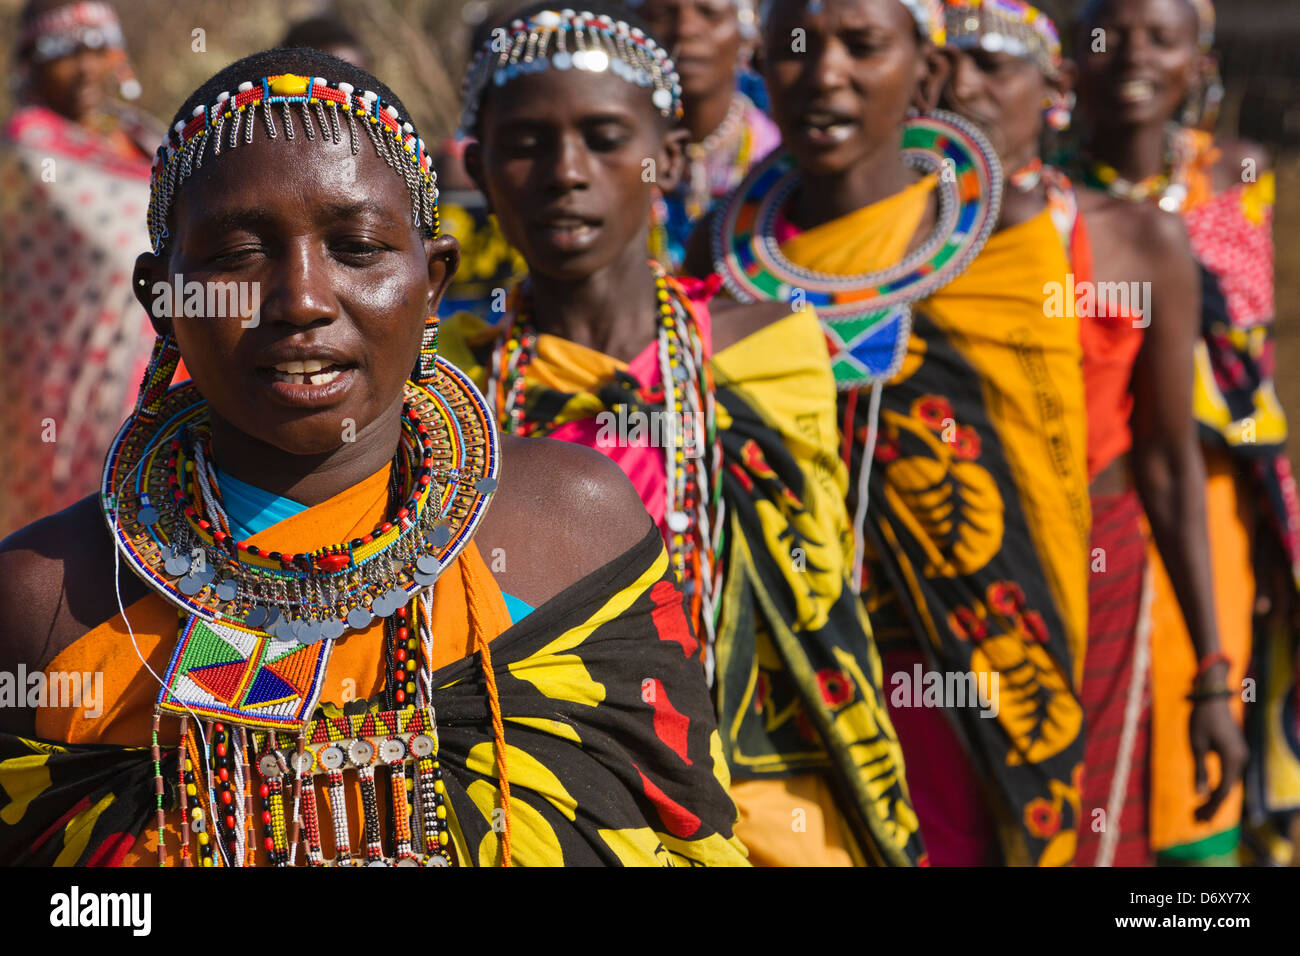 Masai women in colorful costume, Masai Mara, Kenya Stock Photo - Alamy